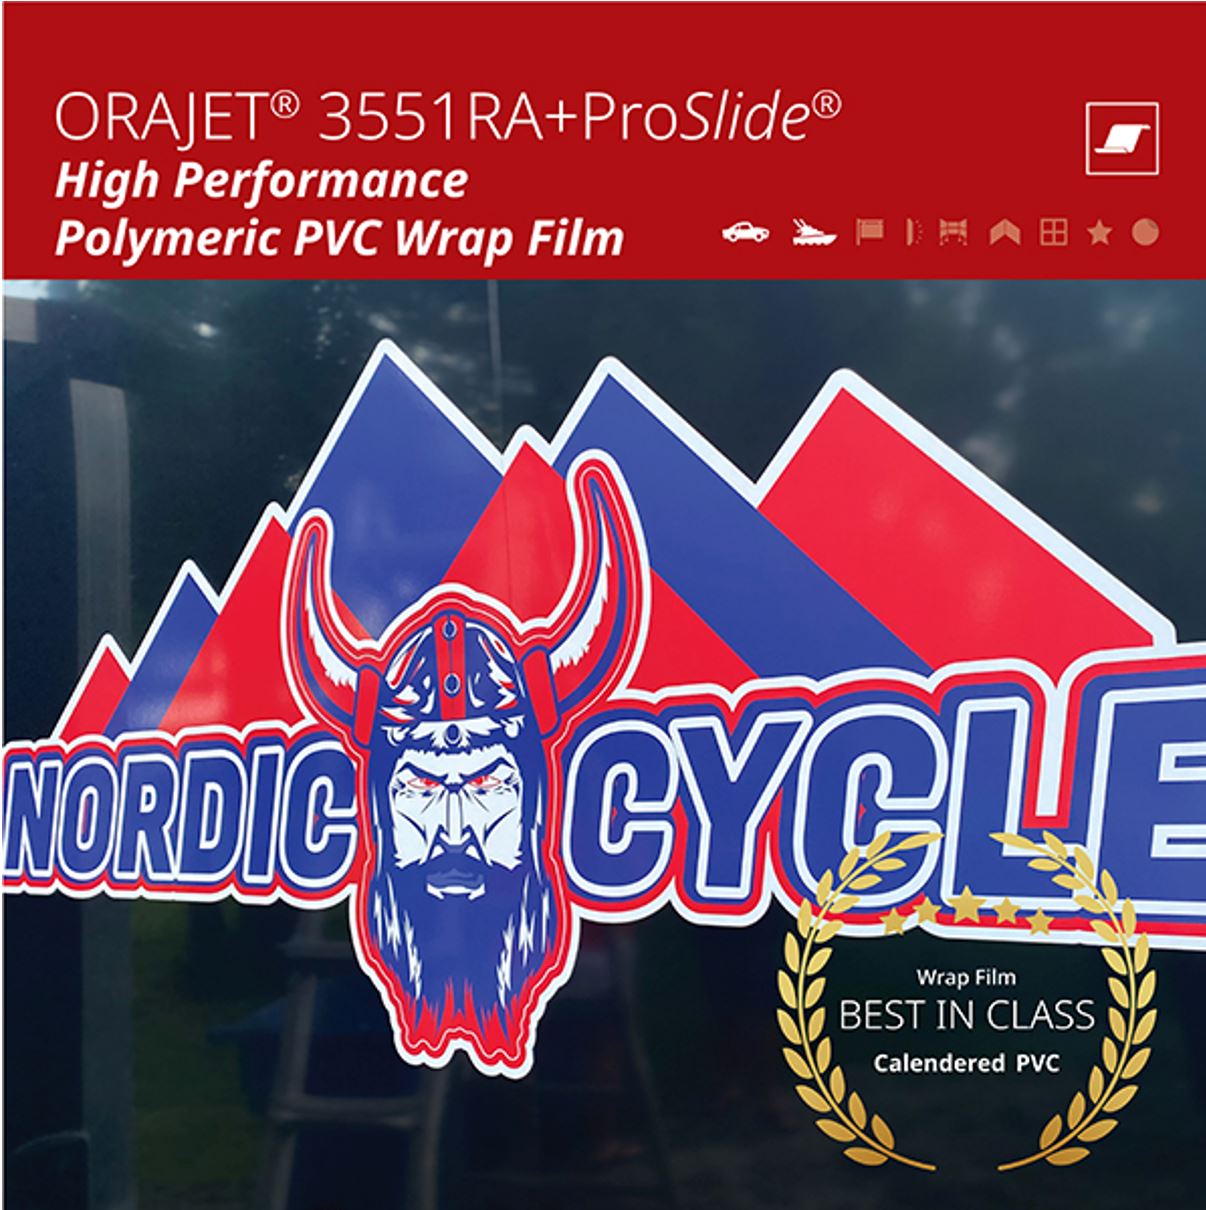 ORAJET® 3551RA+PROSLIDE® High Performance Polymeric PVC Digital Media